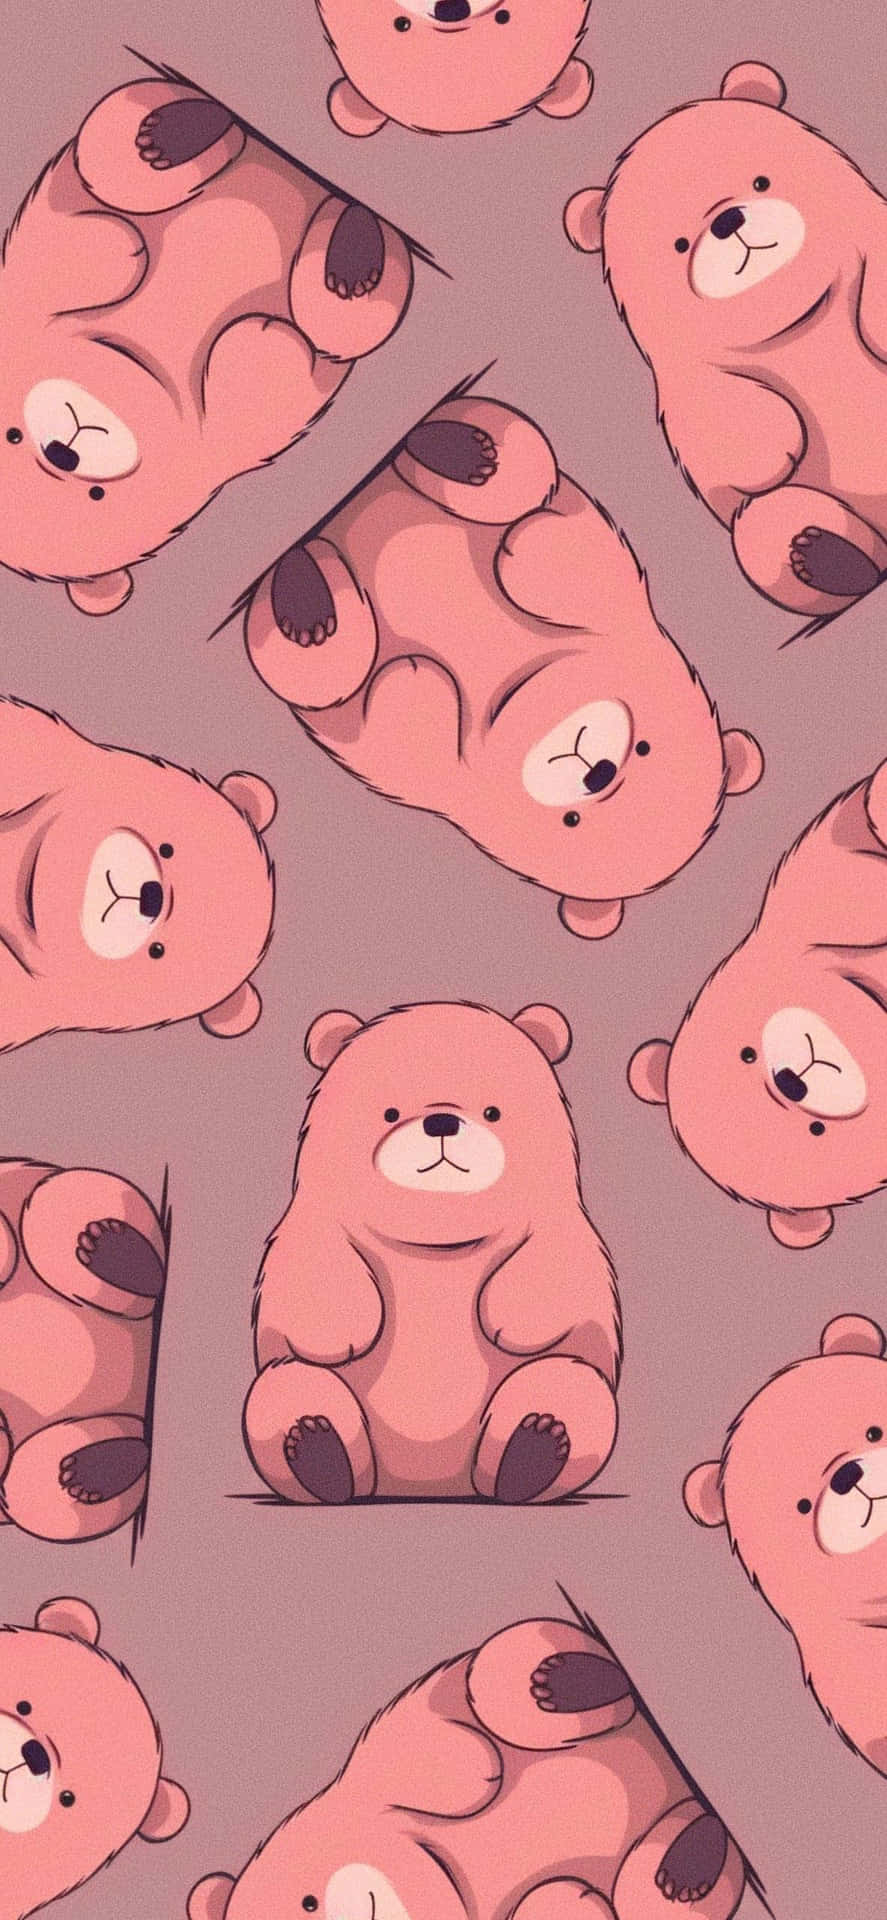 Cute Cartoon Bears Pattern Wallpaper